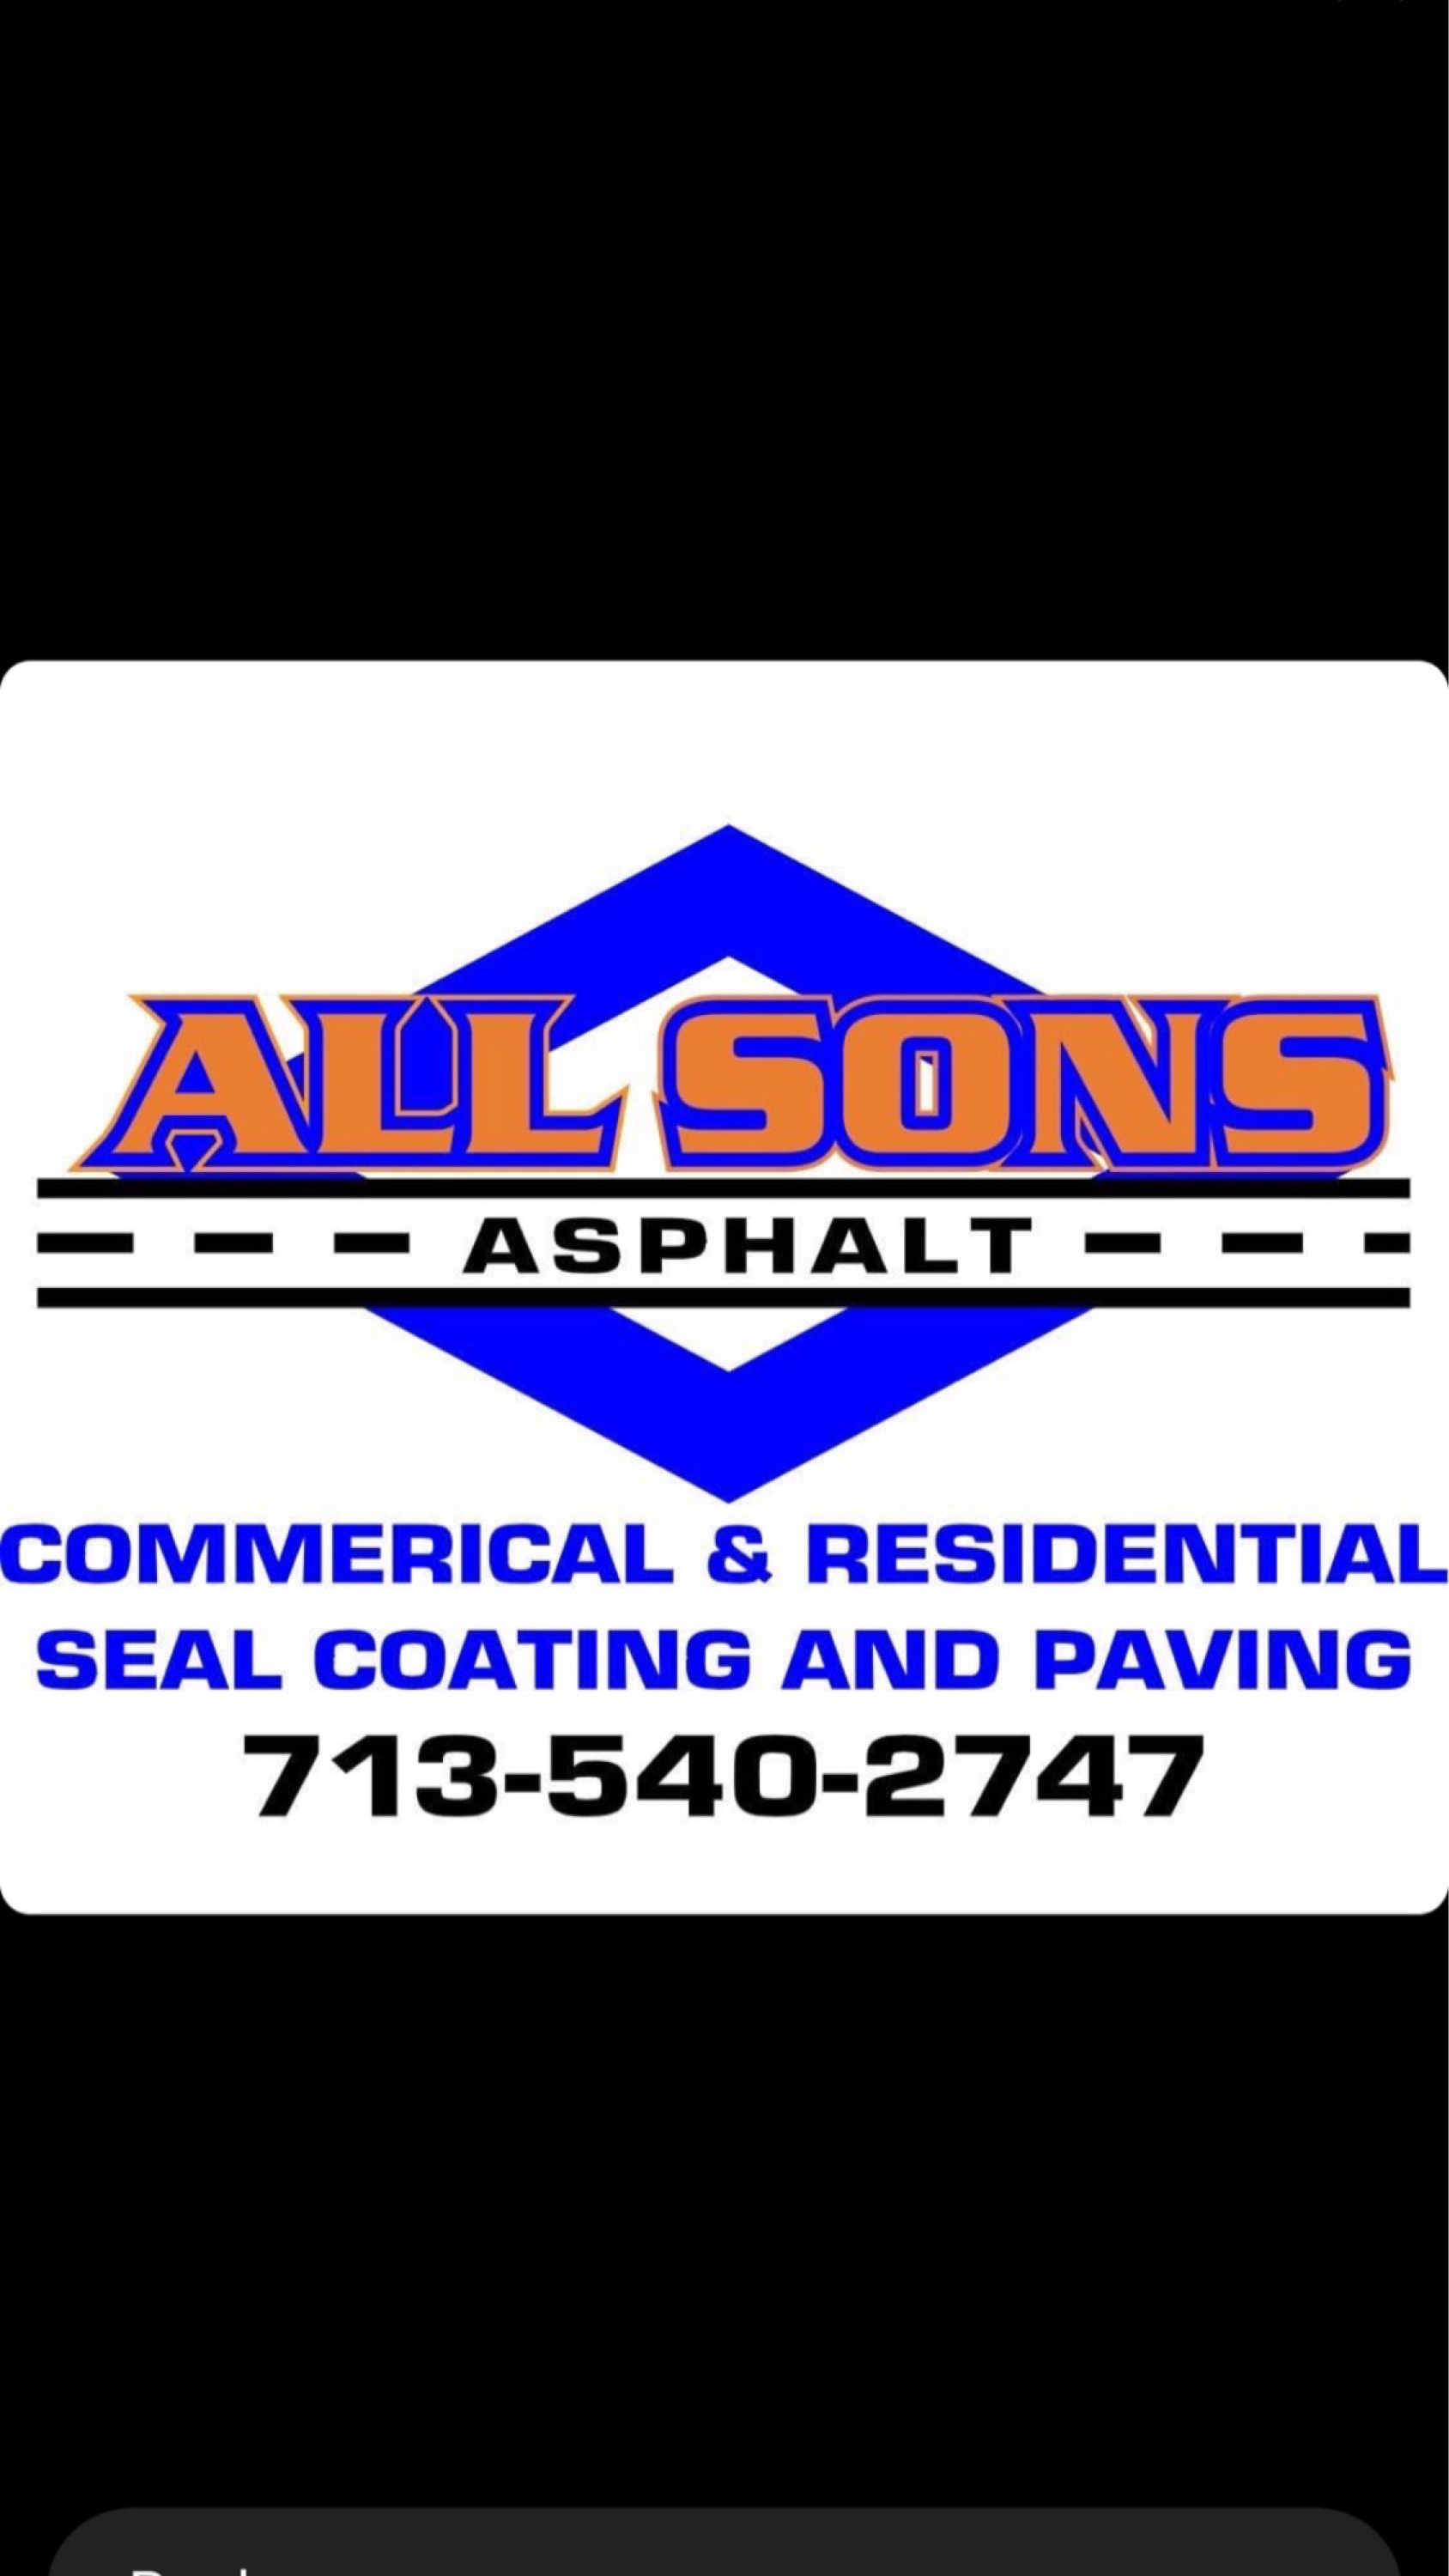 All Sons Asphalt Sealcoating and Paving, LLC Logo